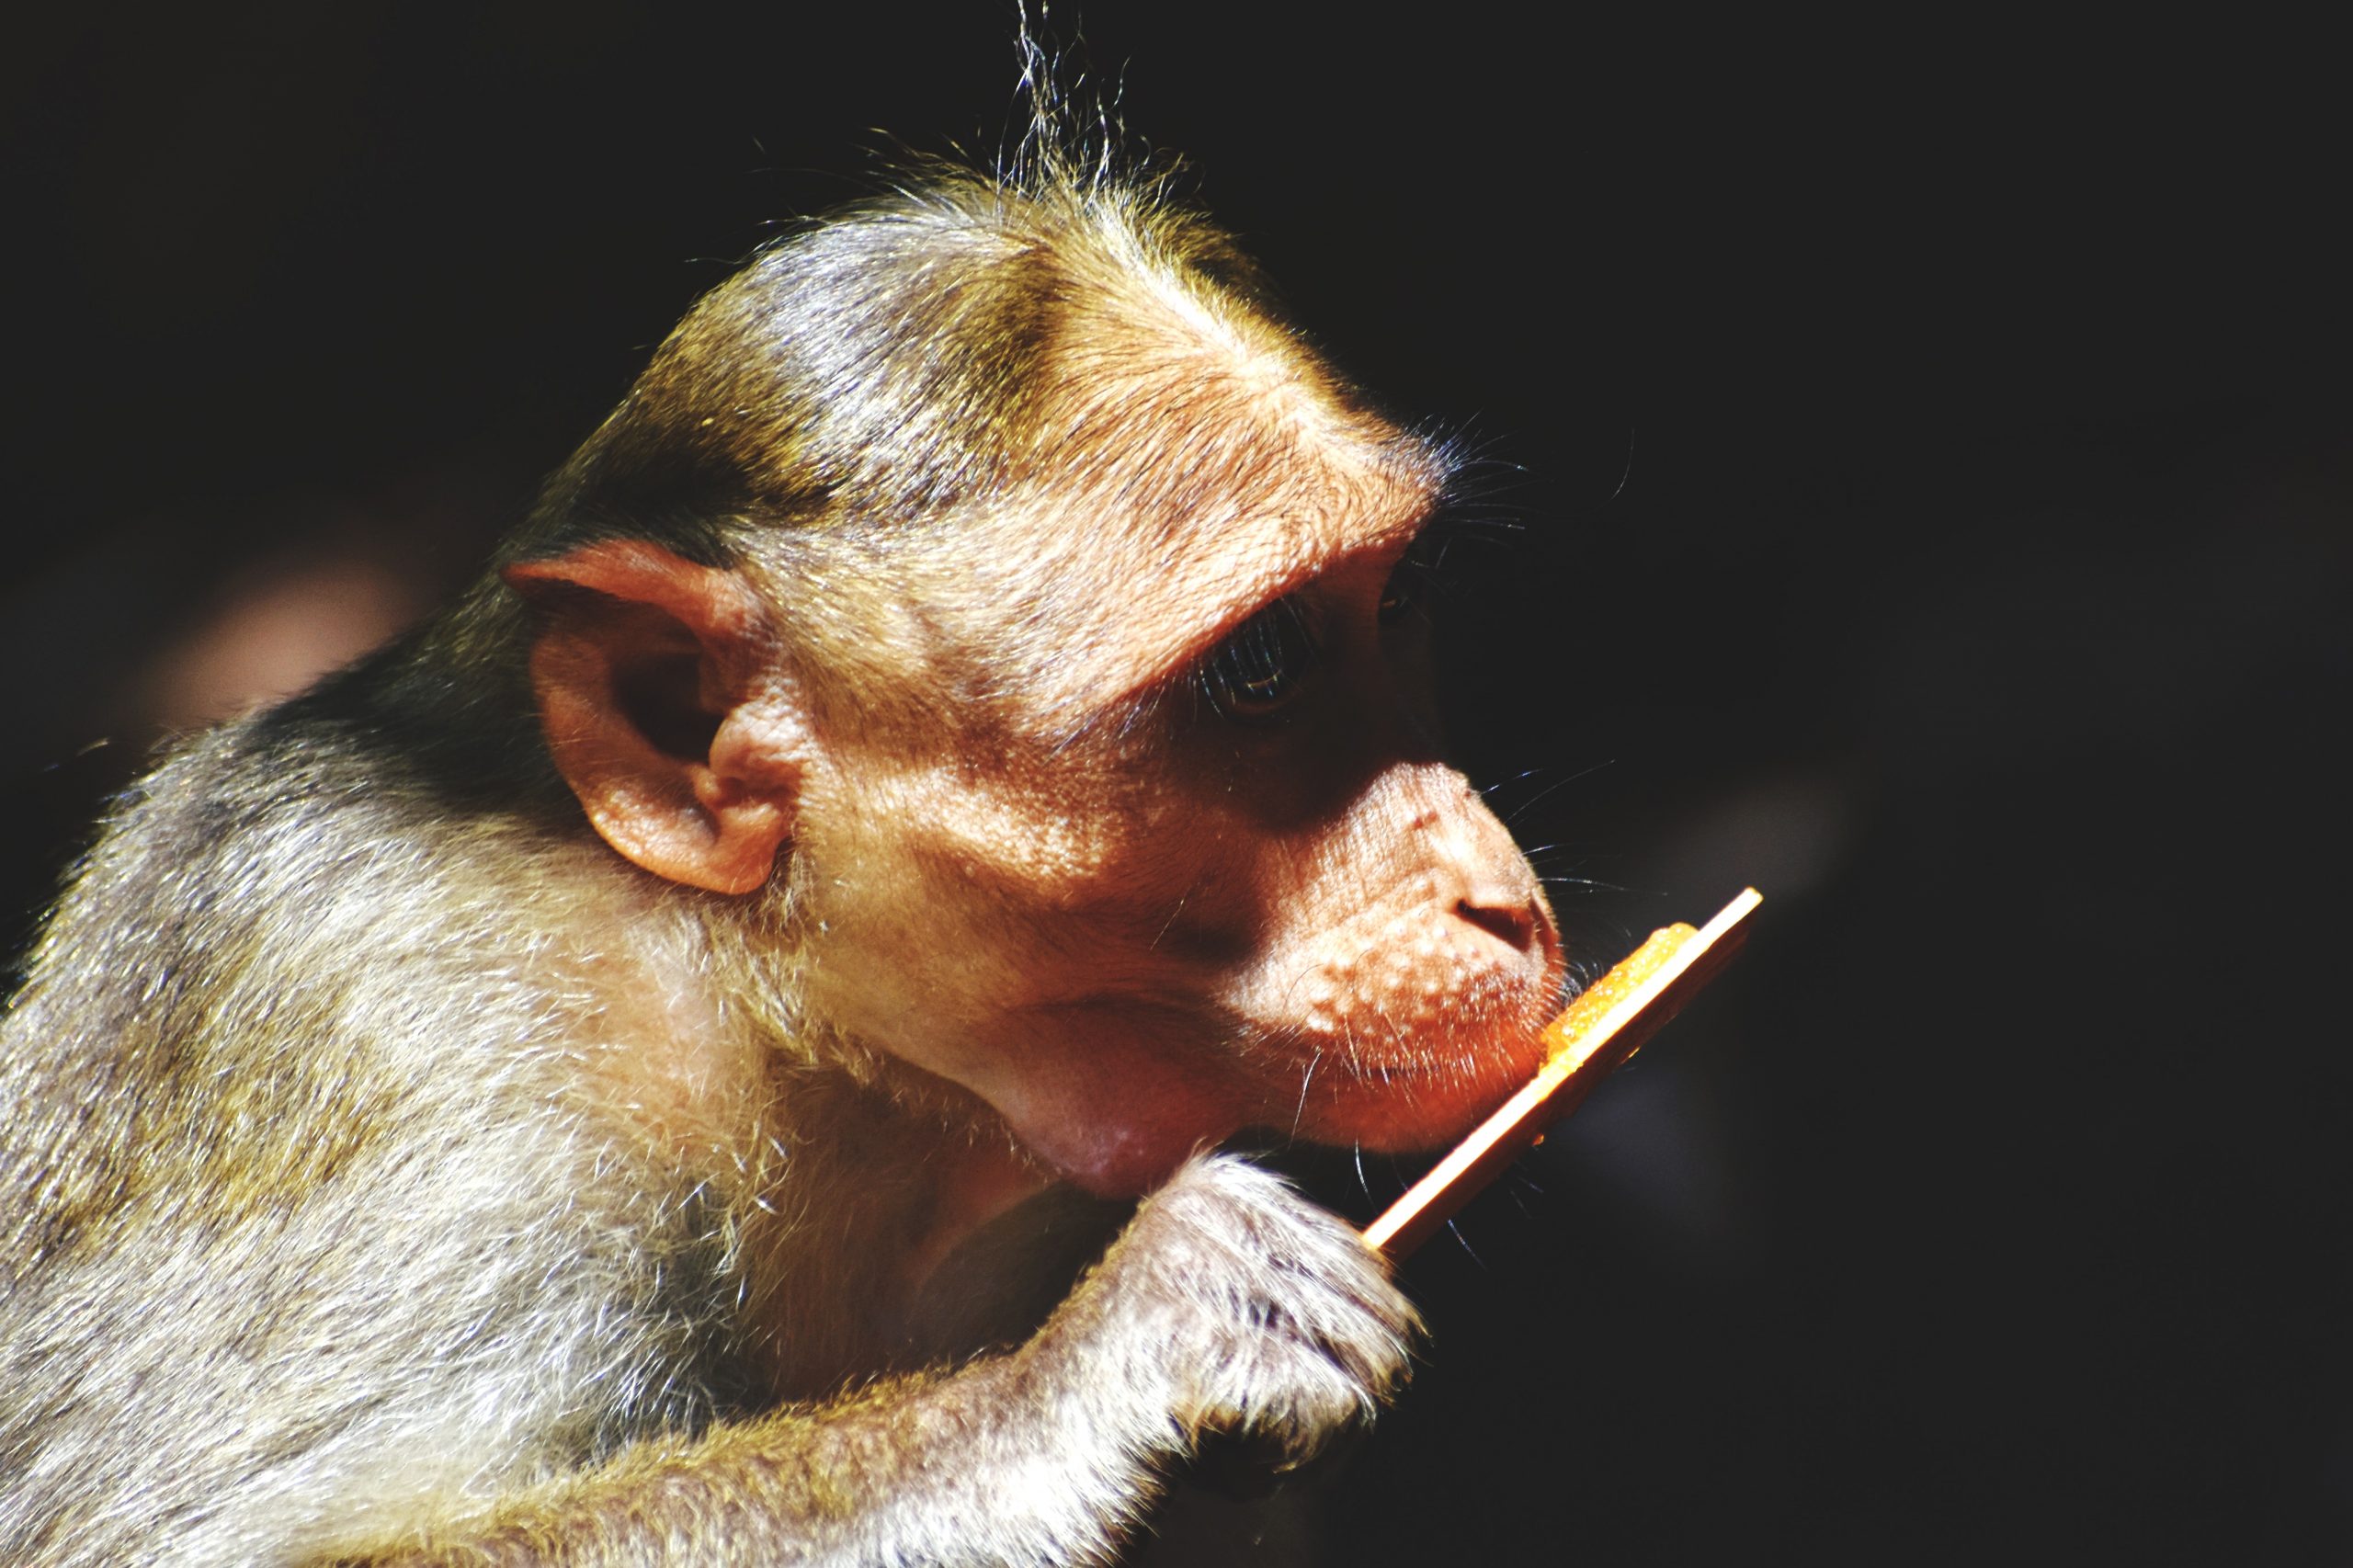 Monkey eating ice cream